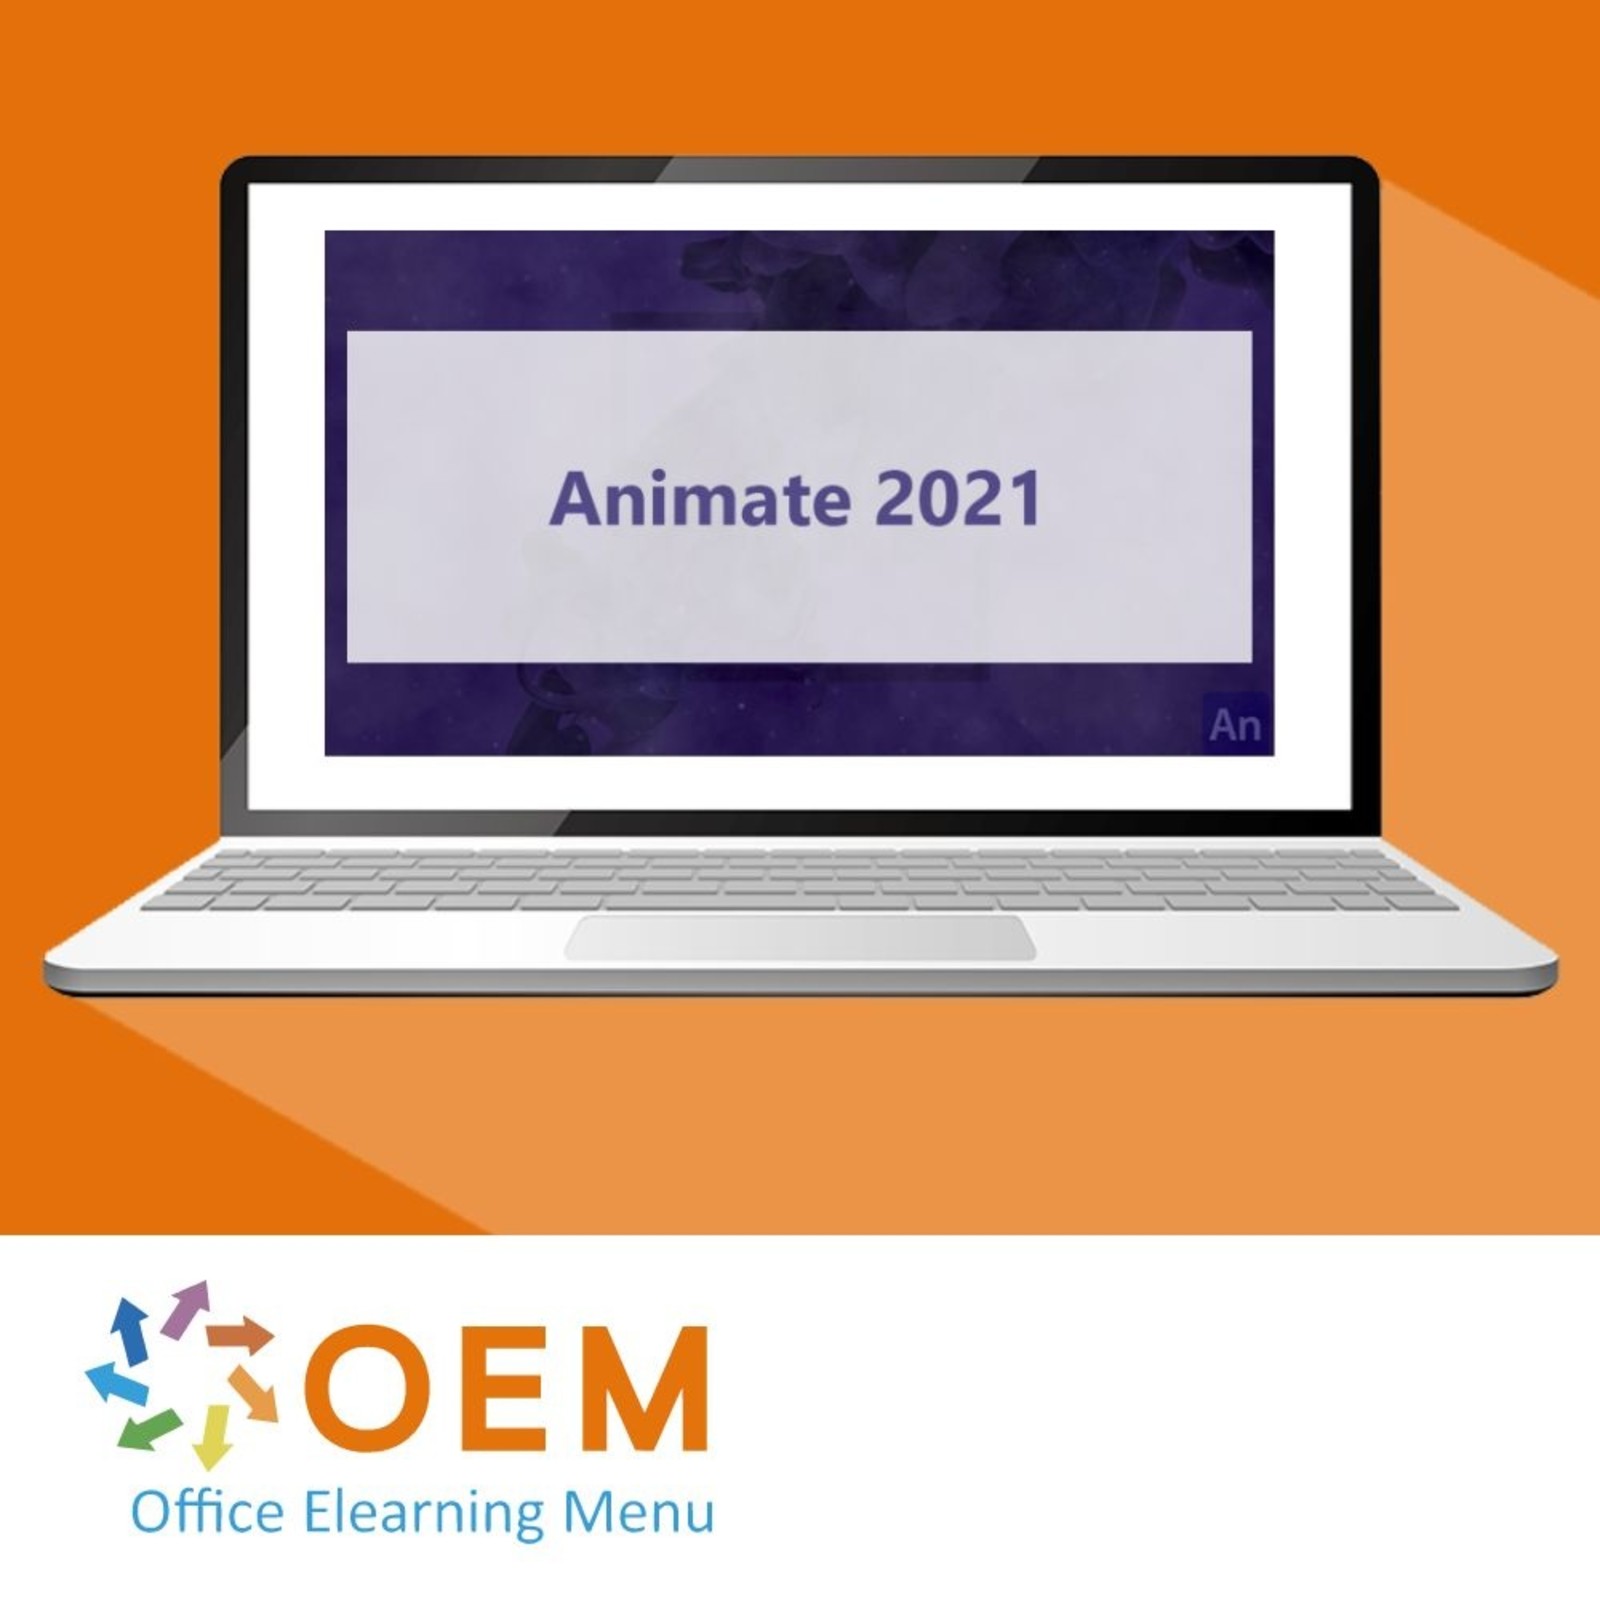 Adobe Vaardigheden Leren: Expert-ICT Trainingen Adobe Animate CC 2021 Course E-Learning